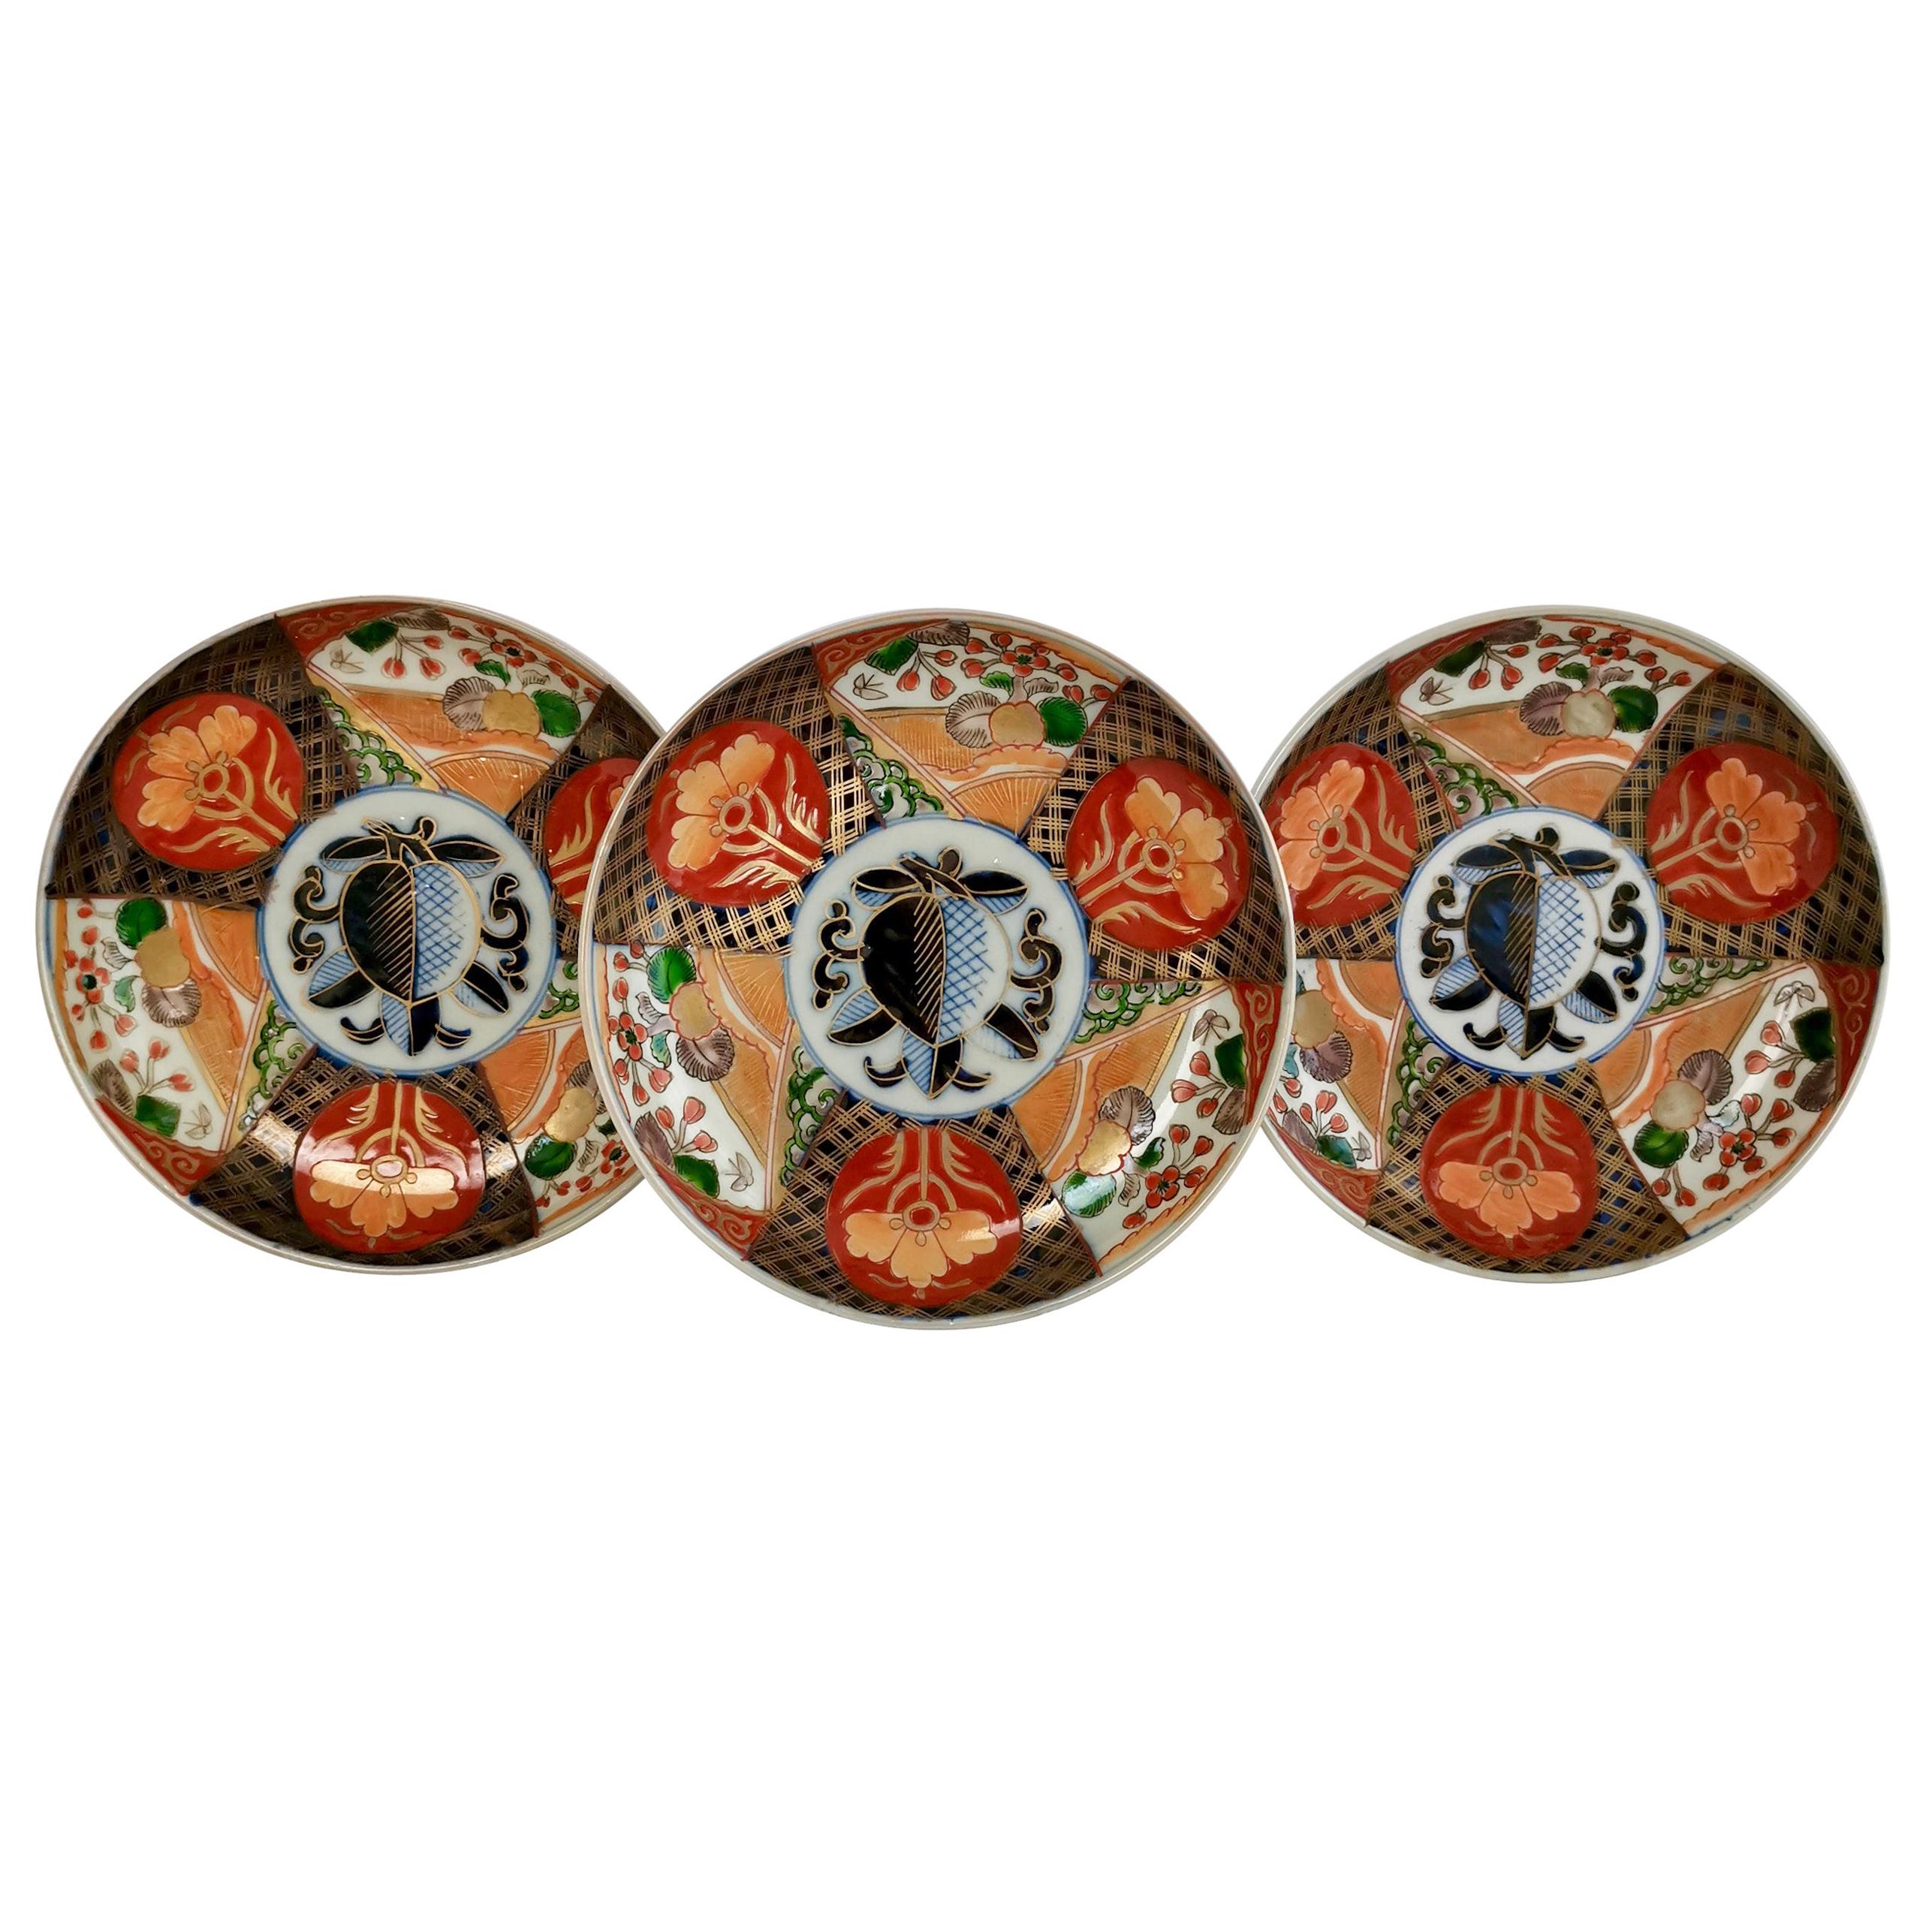 Set of 3 Imari Porcelain Plates, Pomegranate Pattern Late Meiji, circa 1900